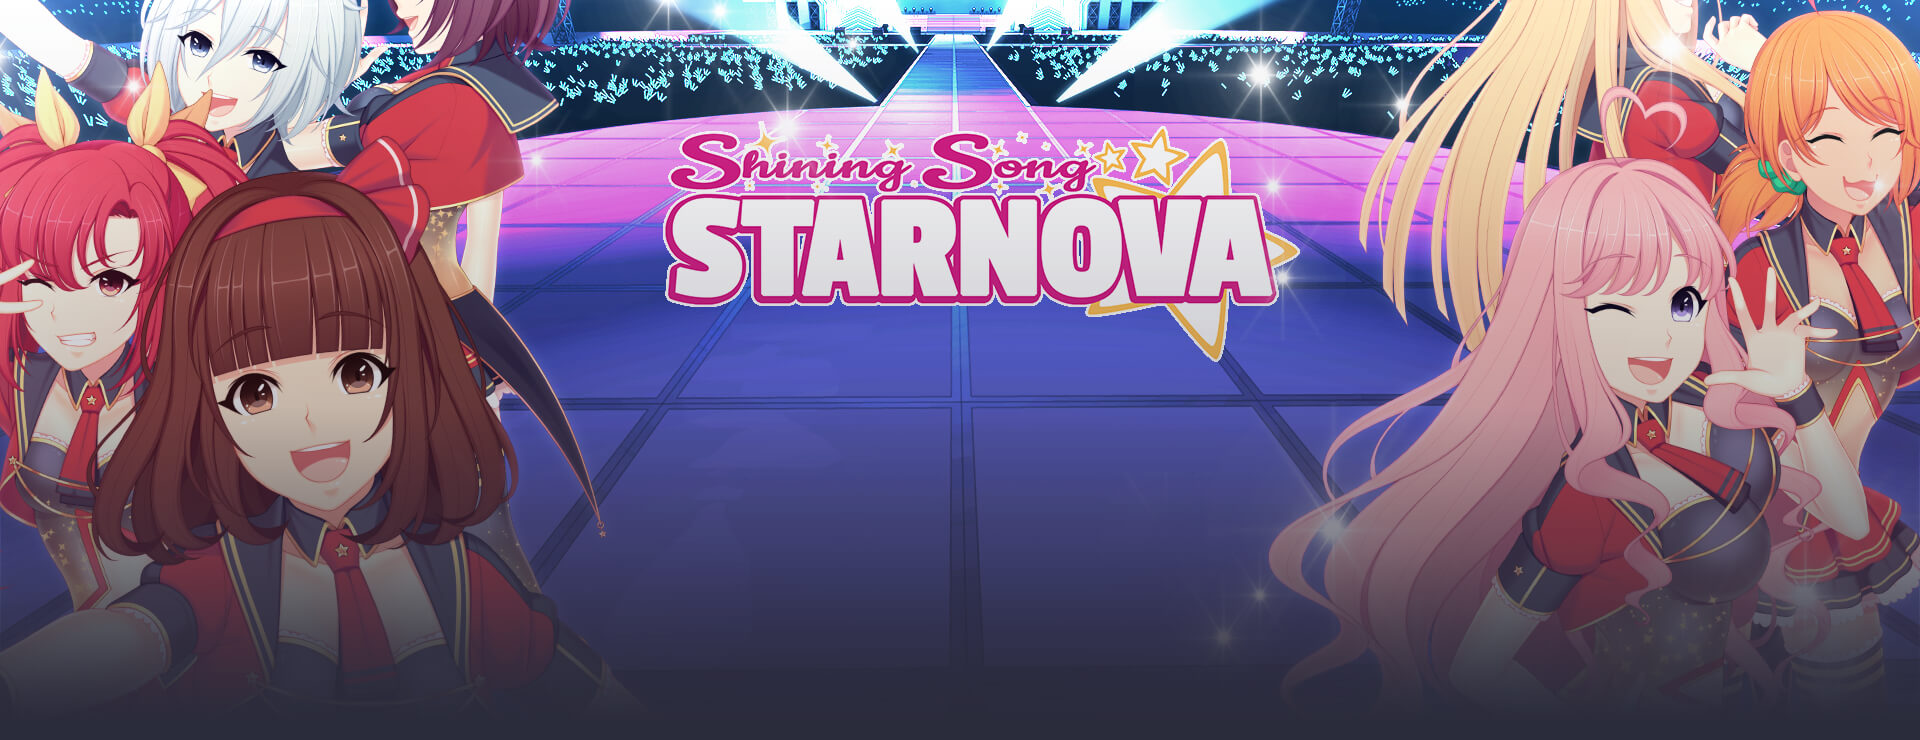 Shining Song Starnova - Novela Visual Juego